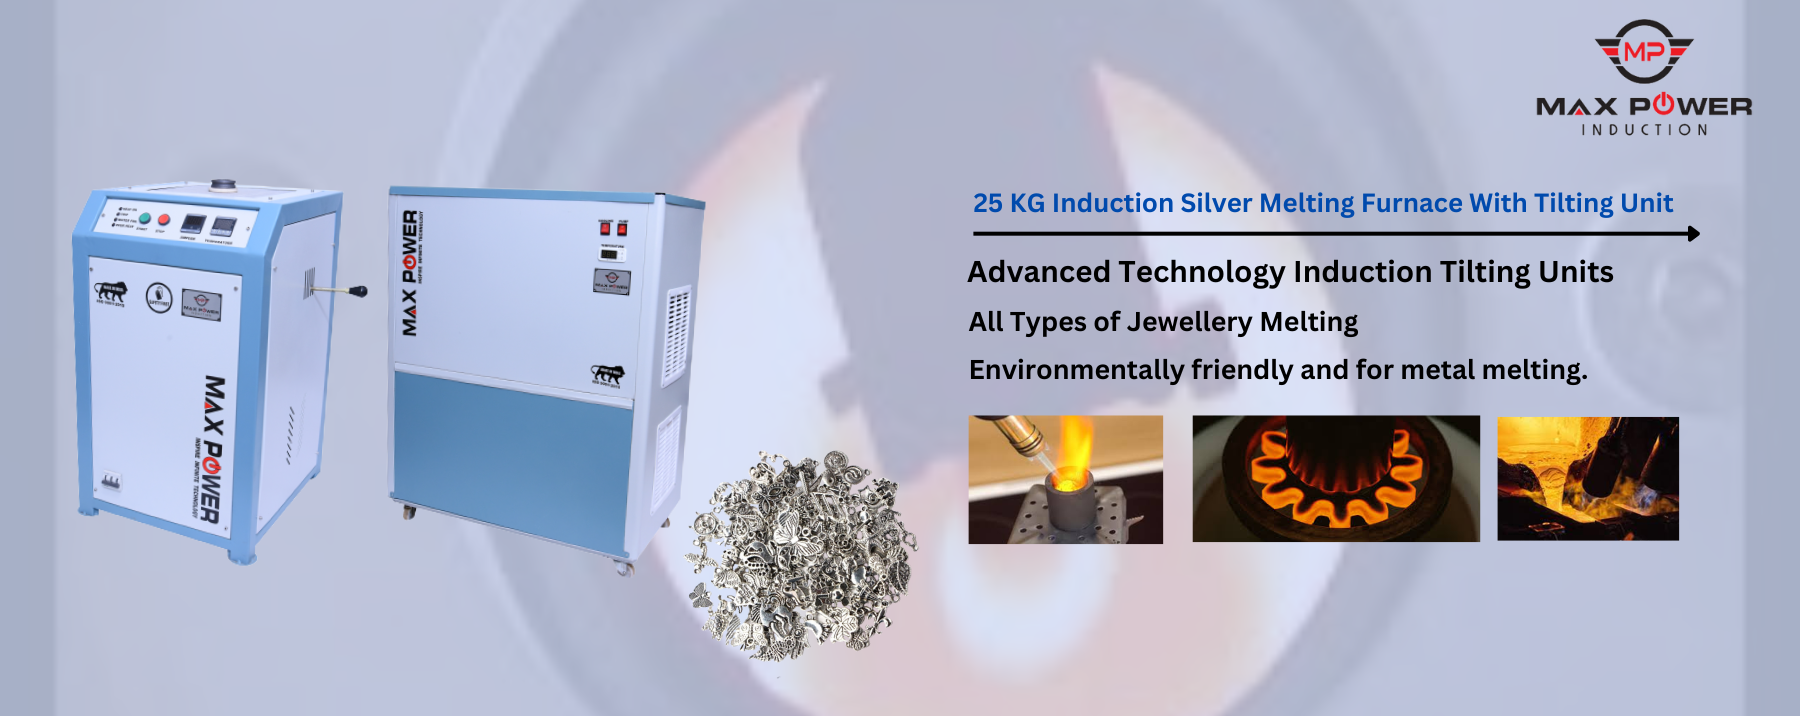 25 KG Induction Silver Melting Furnace With Tilting Unit